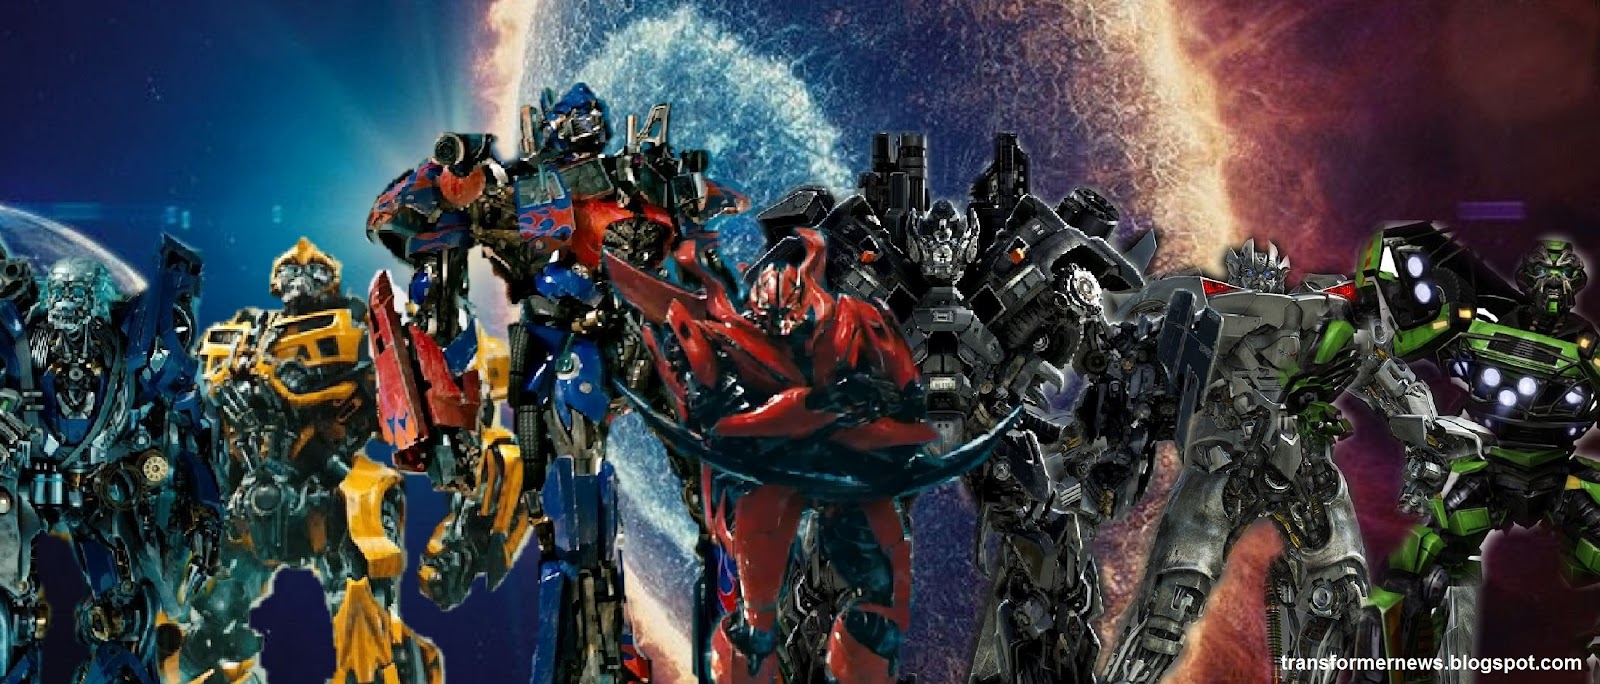 Transformers News Wallpaper